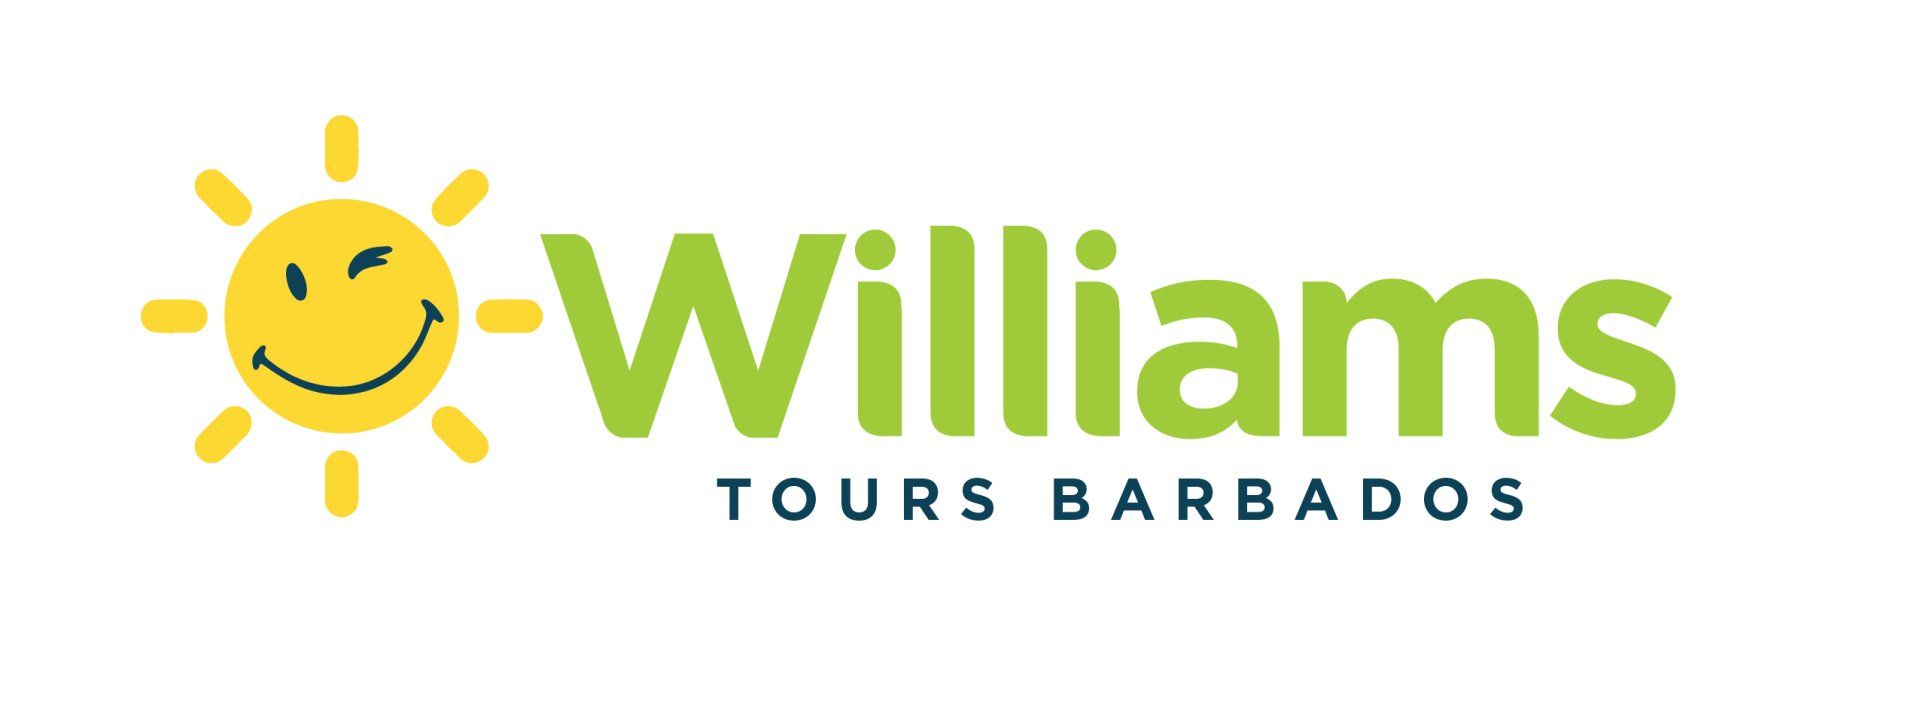 williams island tours barbados